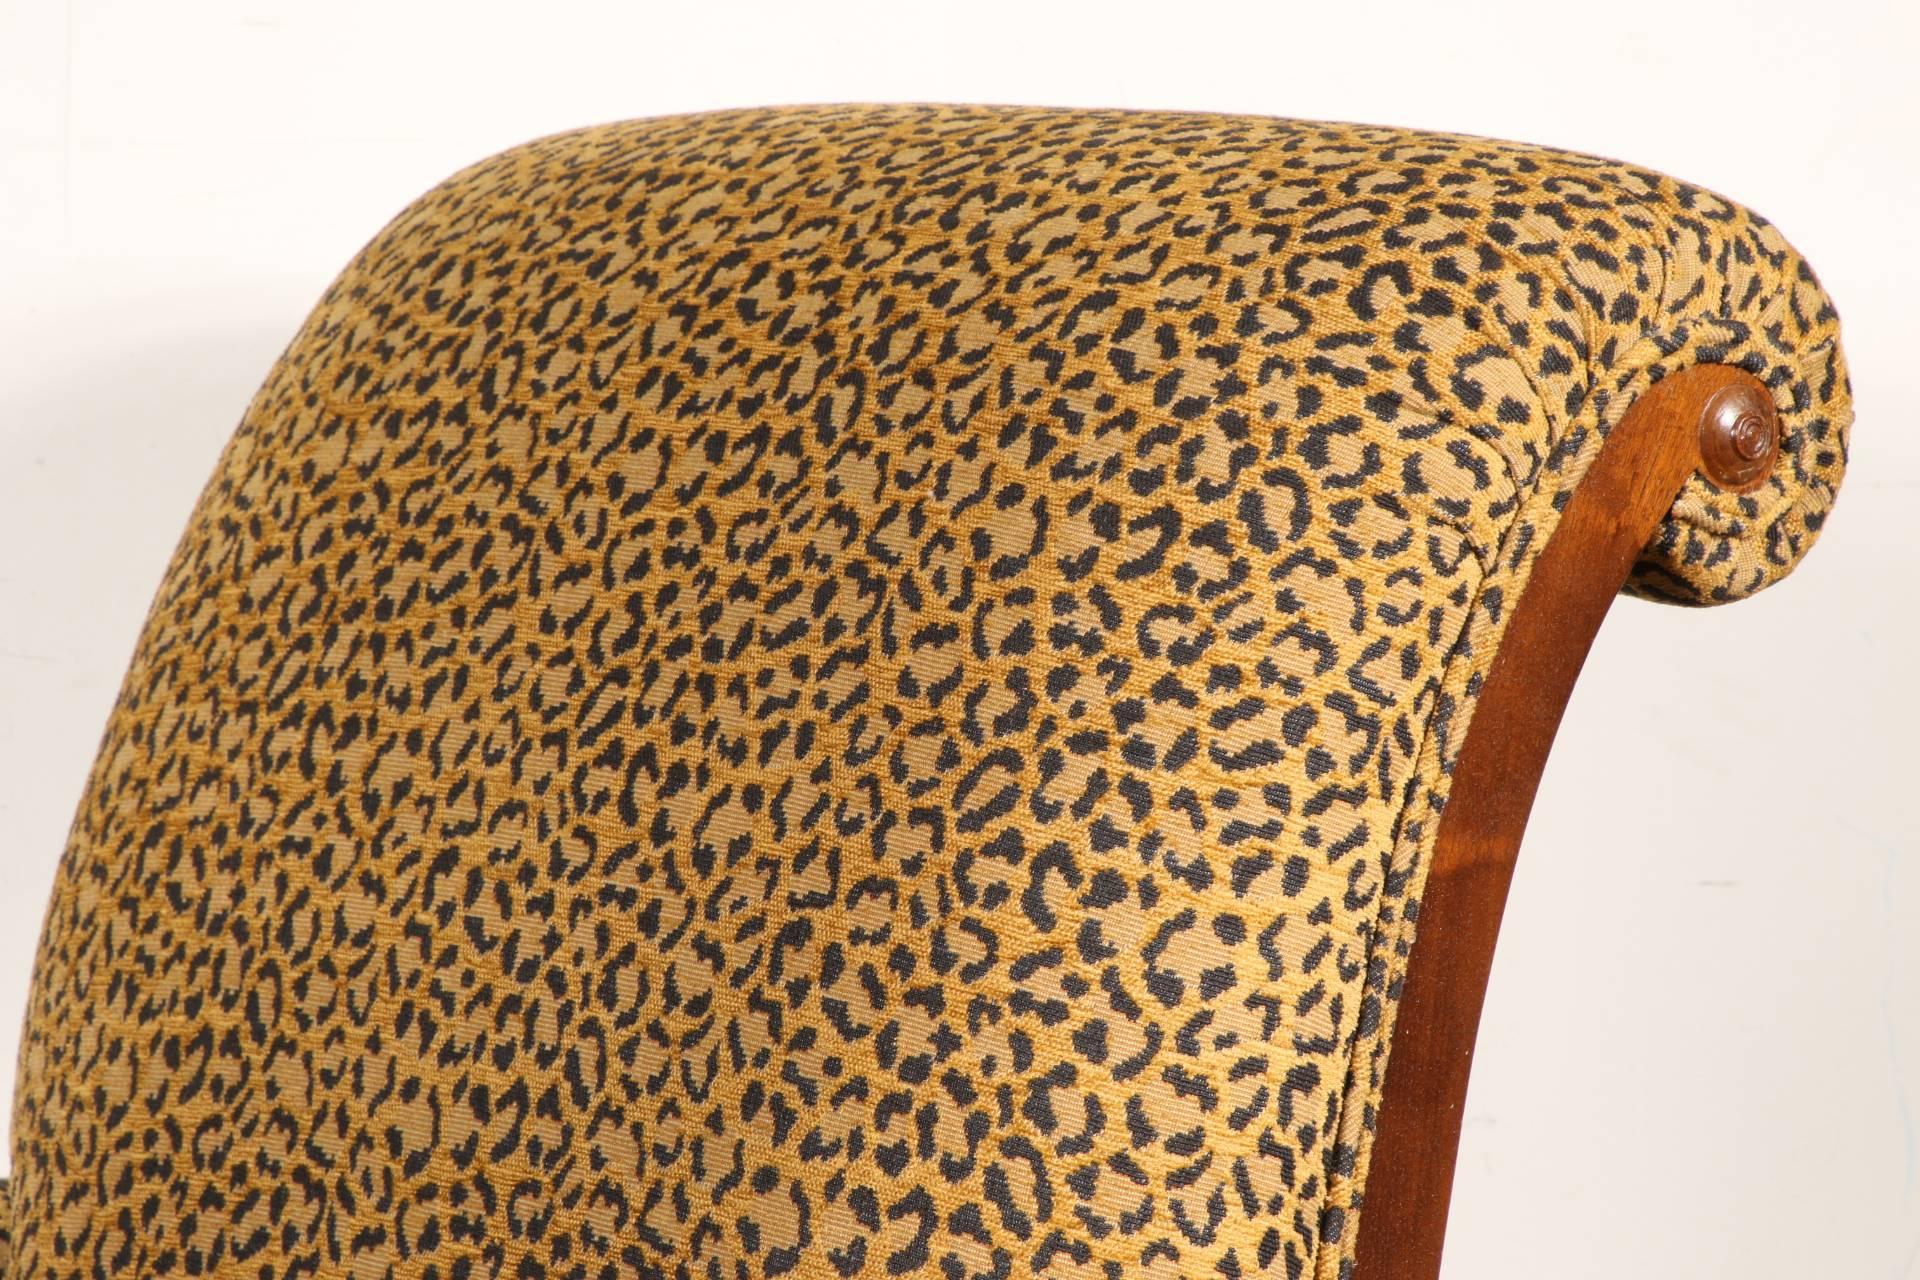 Fabric Animal Print Upholstered Armchair